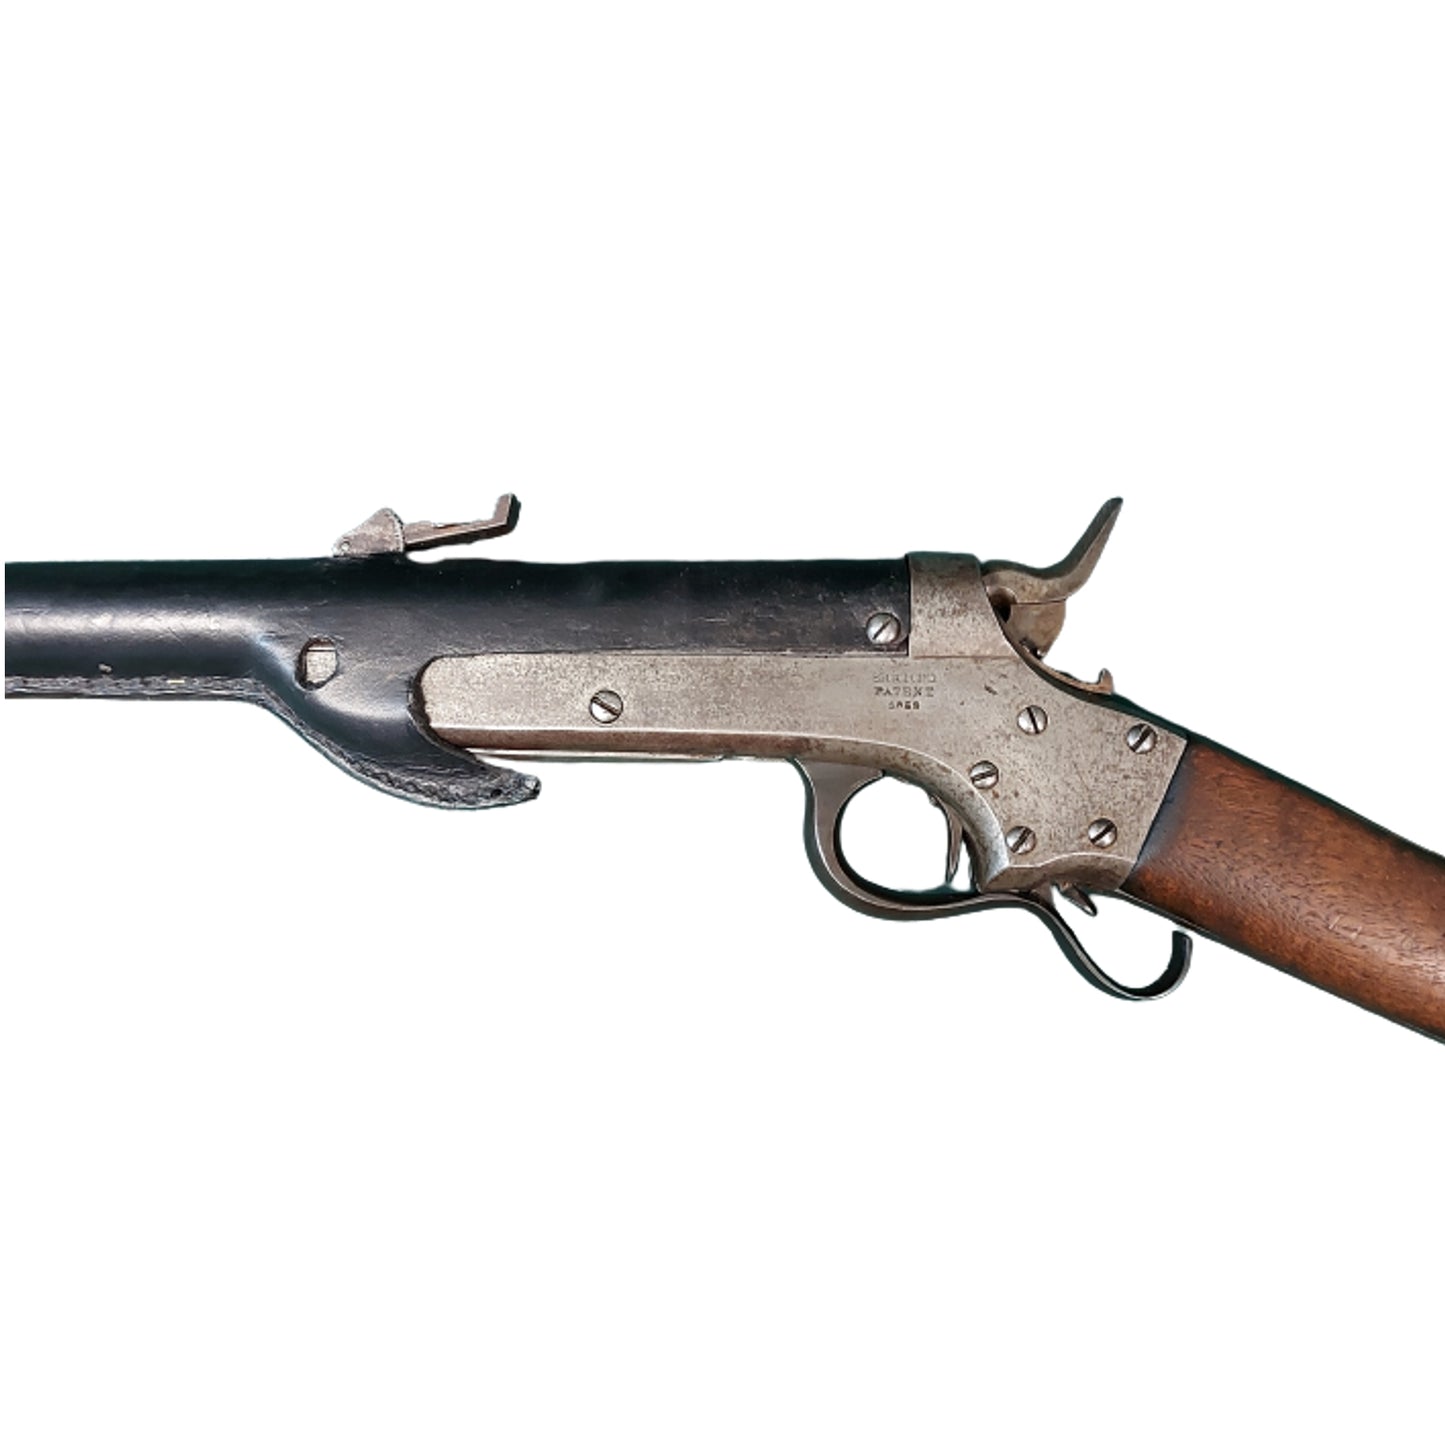 Antique U.S. Civil War Sharps & Hankins M1862 Naval Carbine